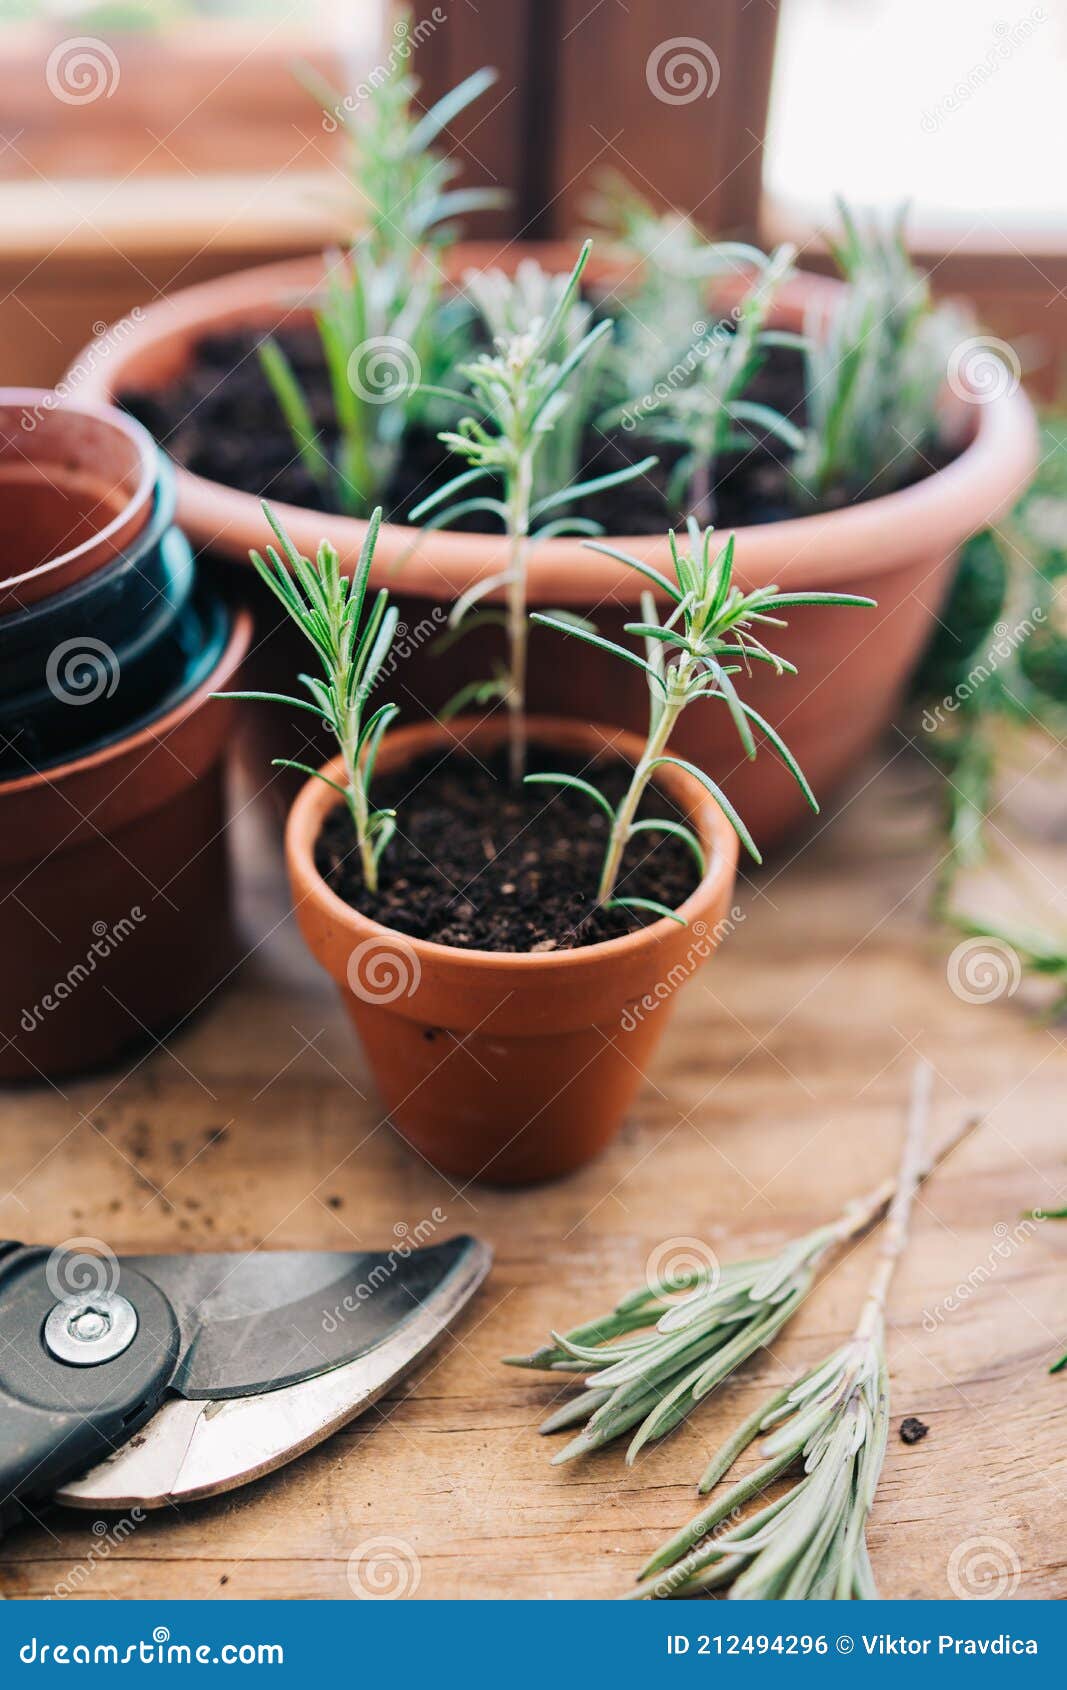 rosmarinus plant cuttings